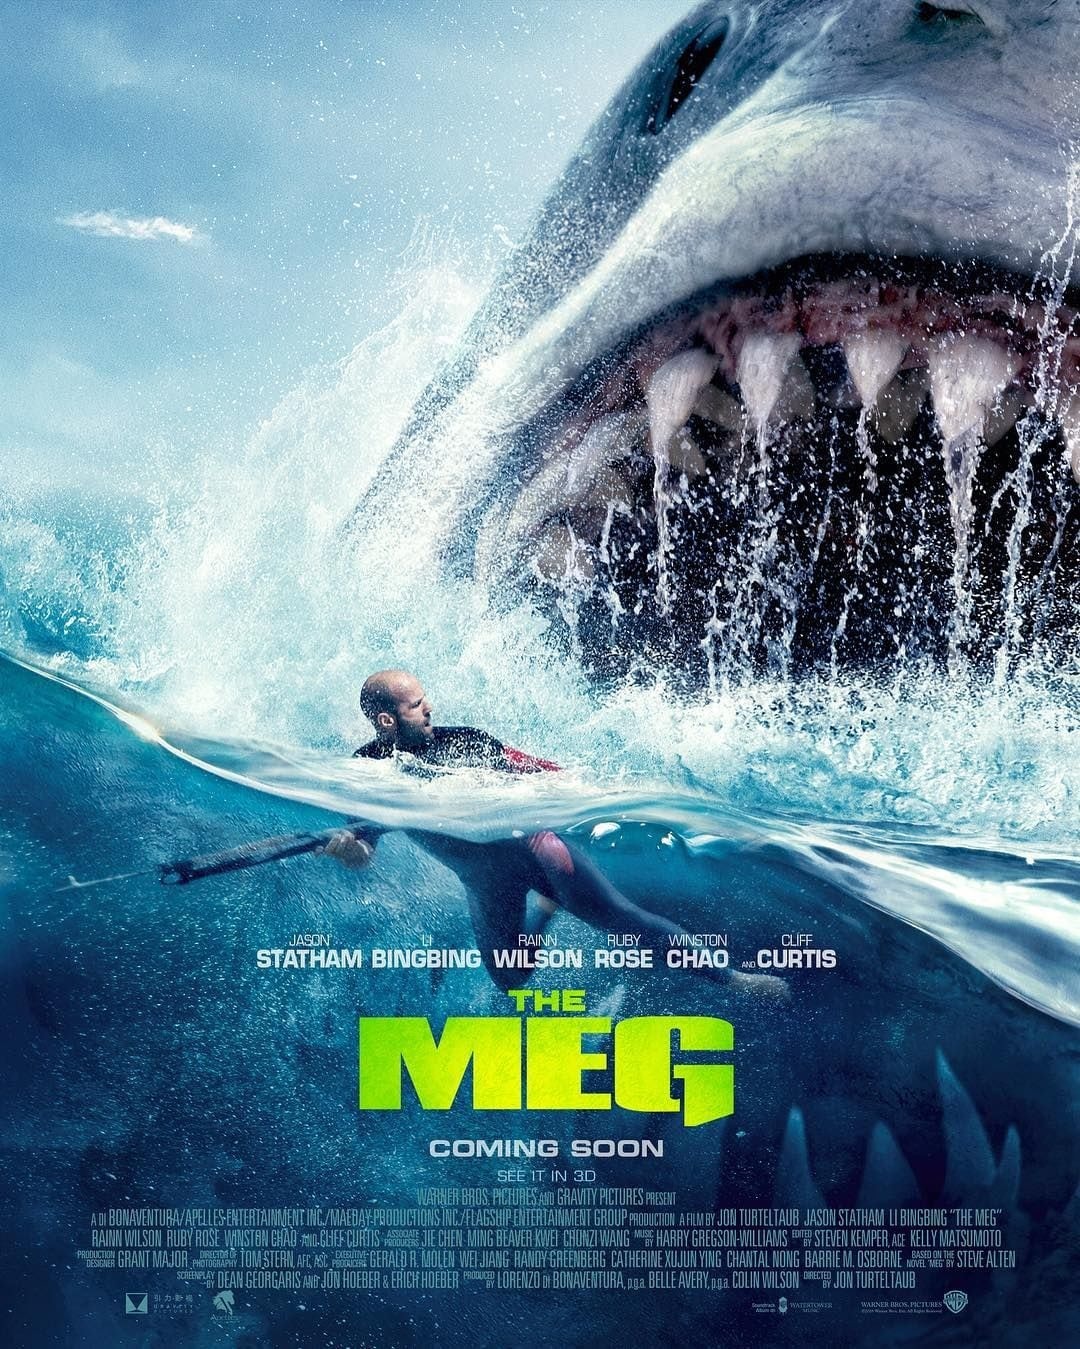 The Meg - Movie Review